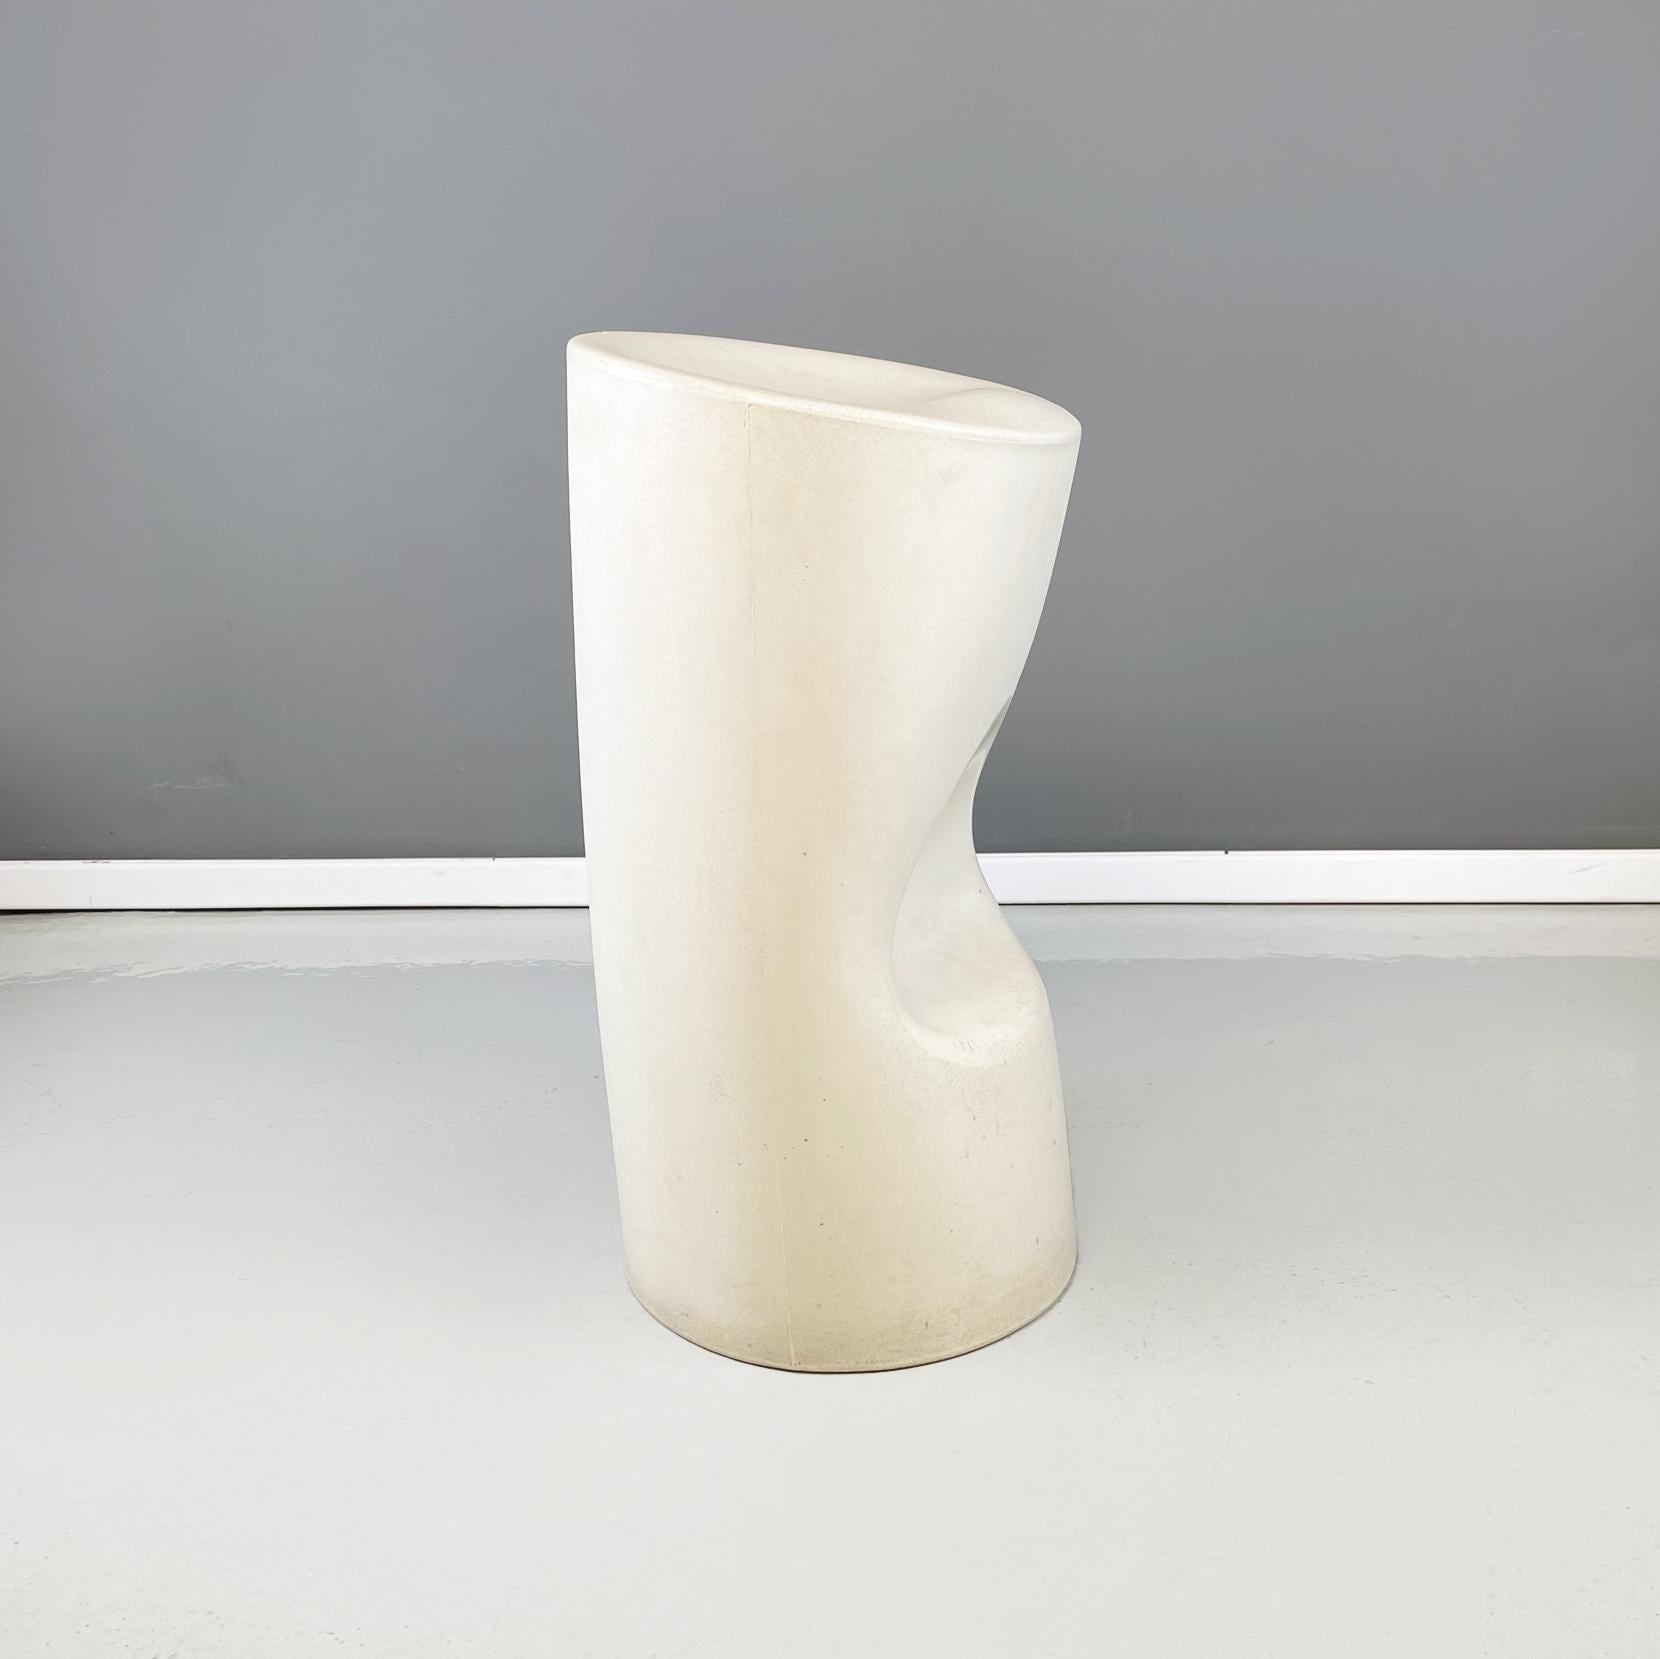 Space Age Italian Post Modern White Plastic Stool Tokyo Pop by Yoshioka Driade, 2000s For Sale